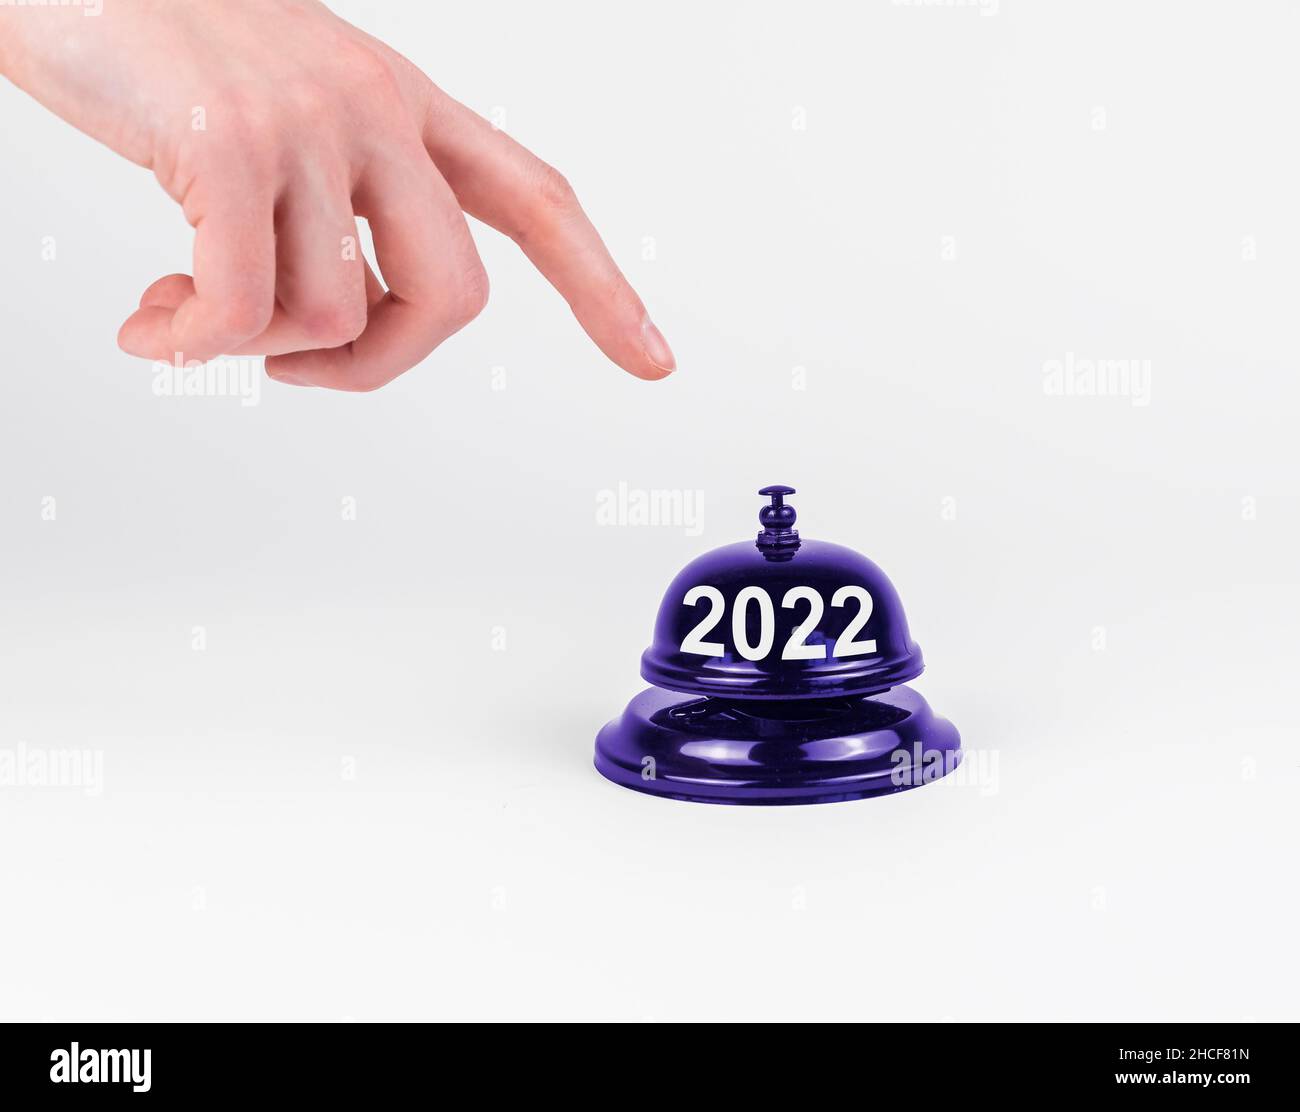 2022 New Year start concept. Hand finger pressing desk bell button. Stock Photo